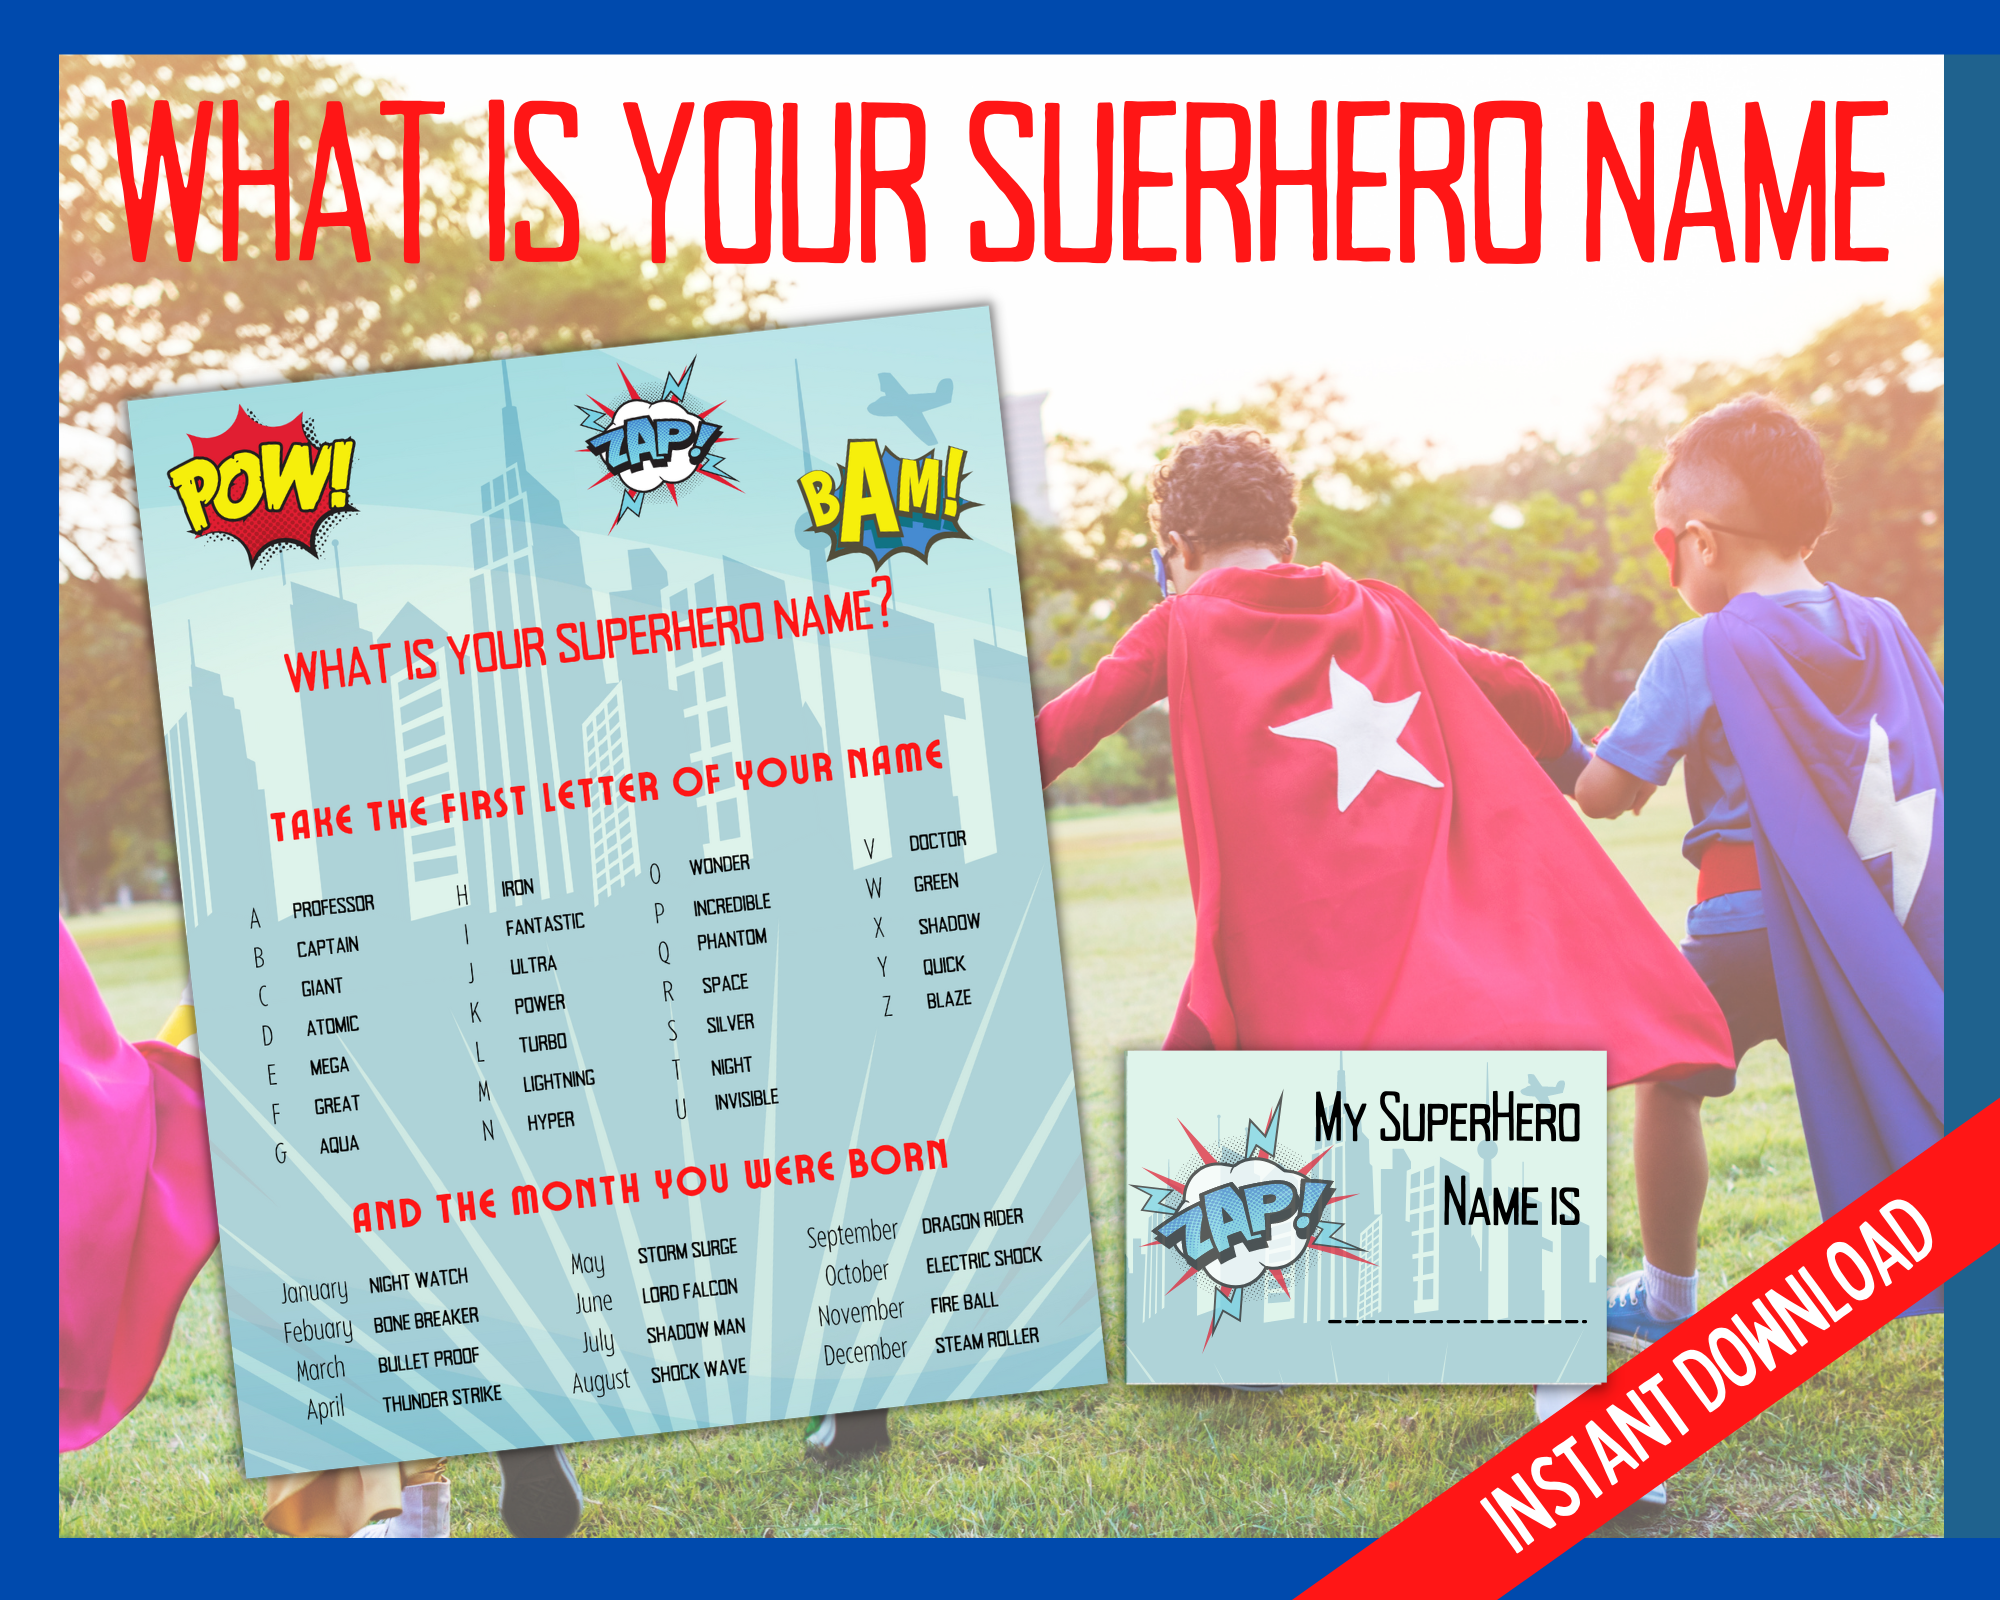 Superhero by name